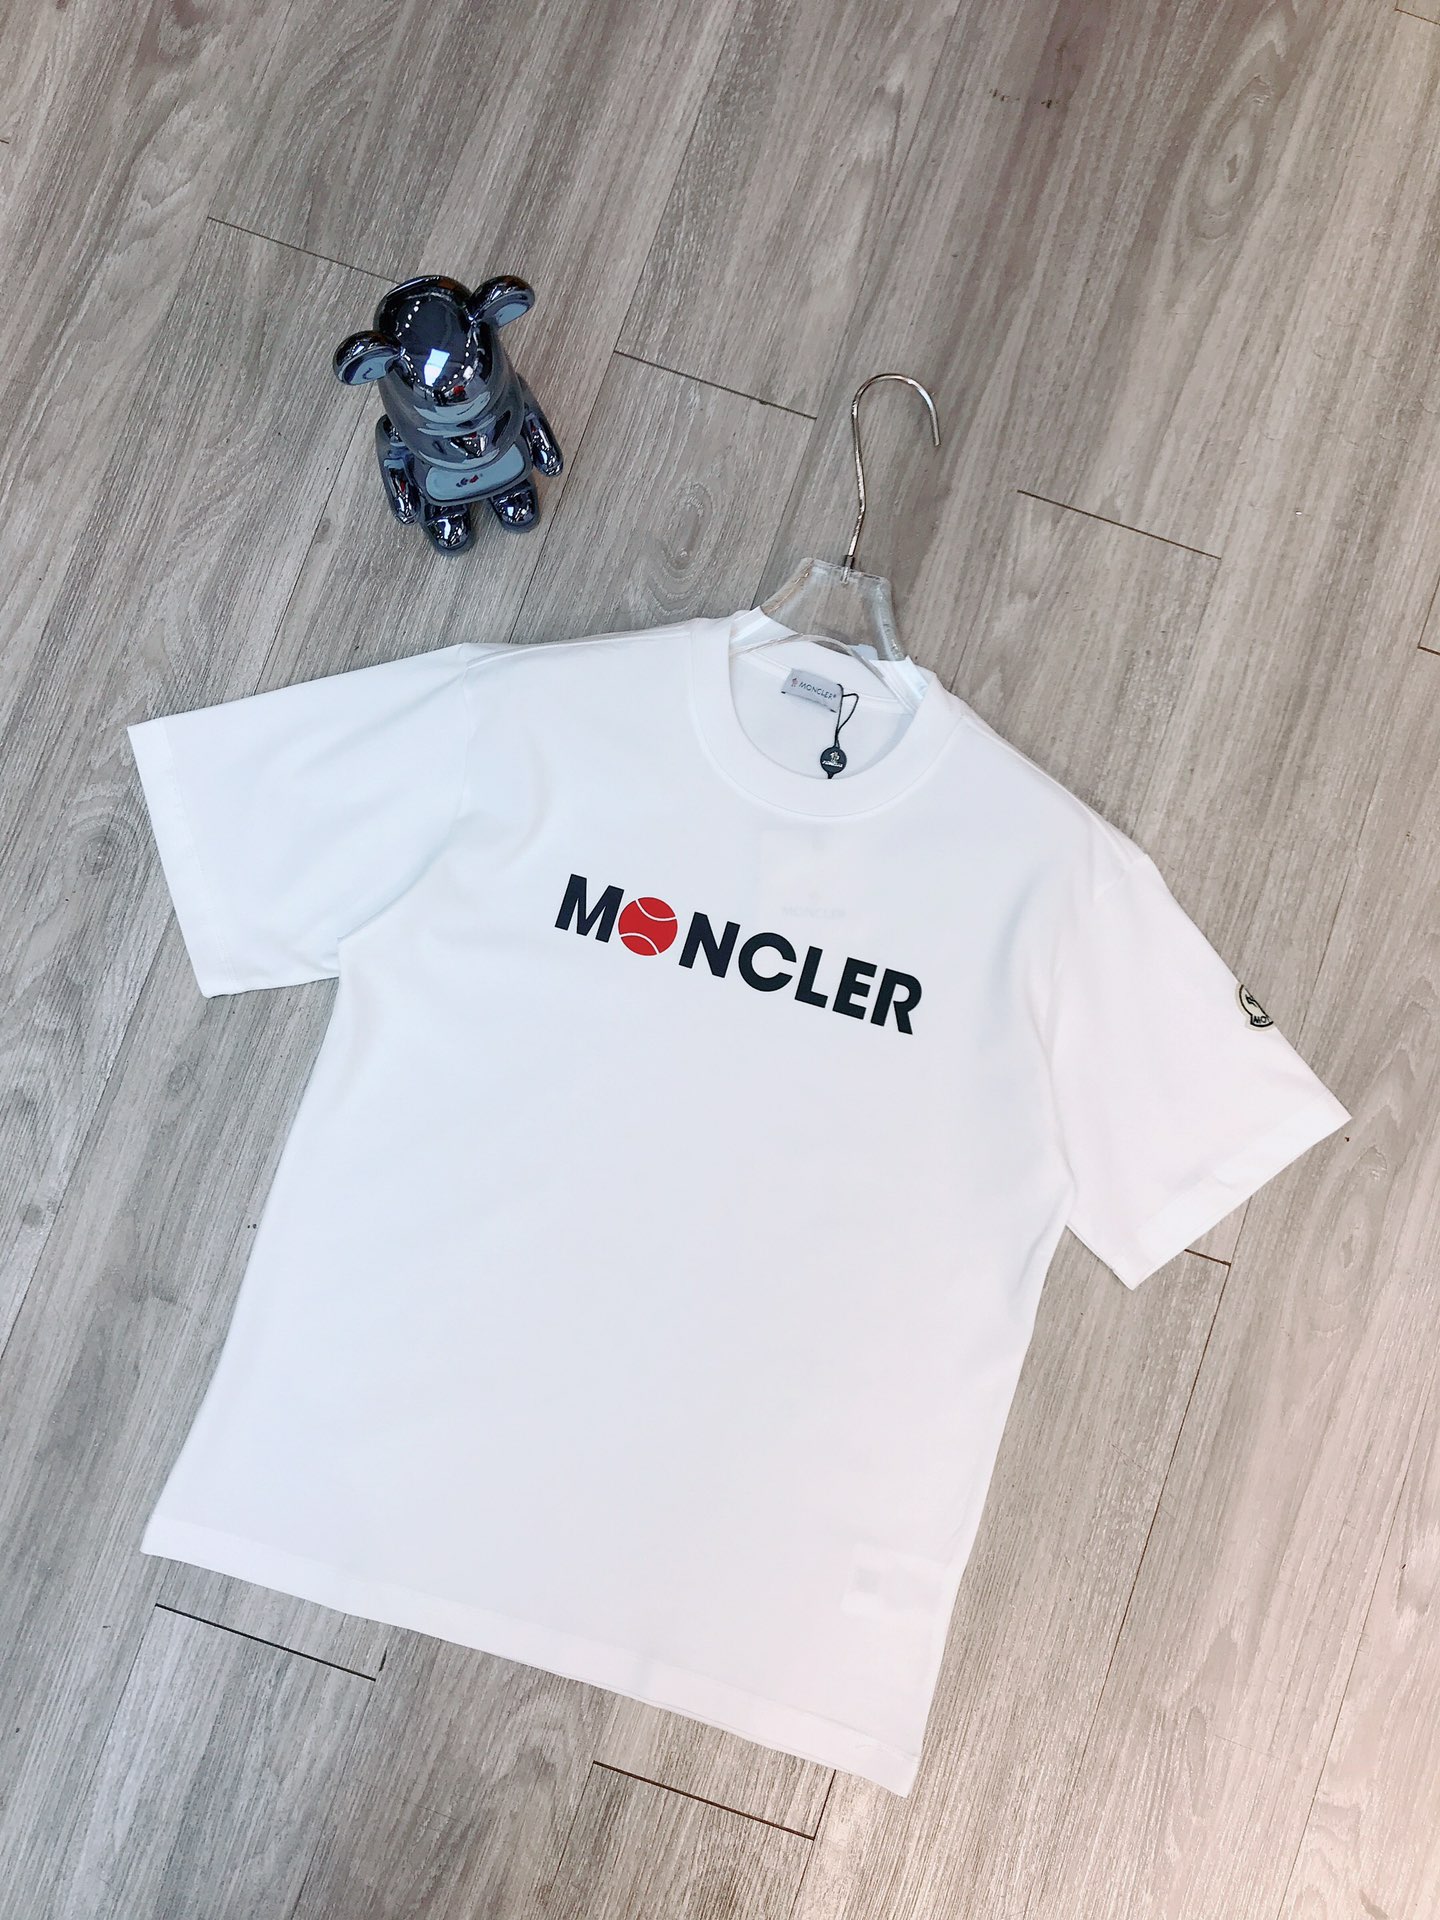 Moncler Buy Clothing T-Shirt Black White Men Cotton Spring/Summer Collection Fashion Short Sleeve